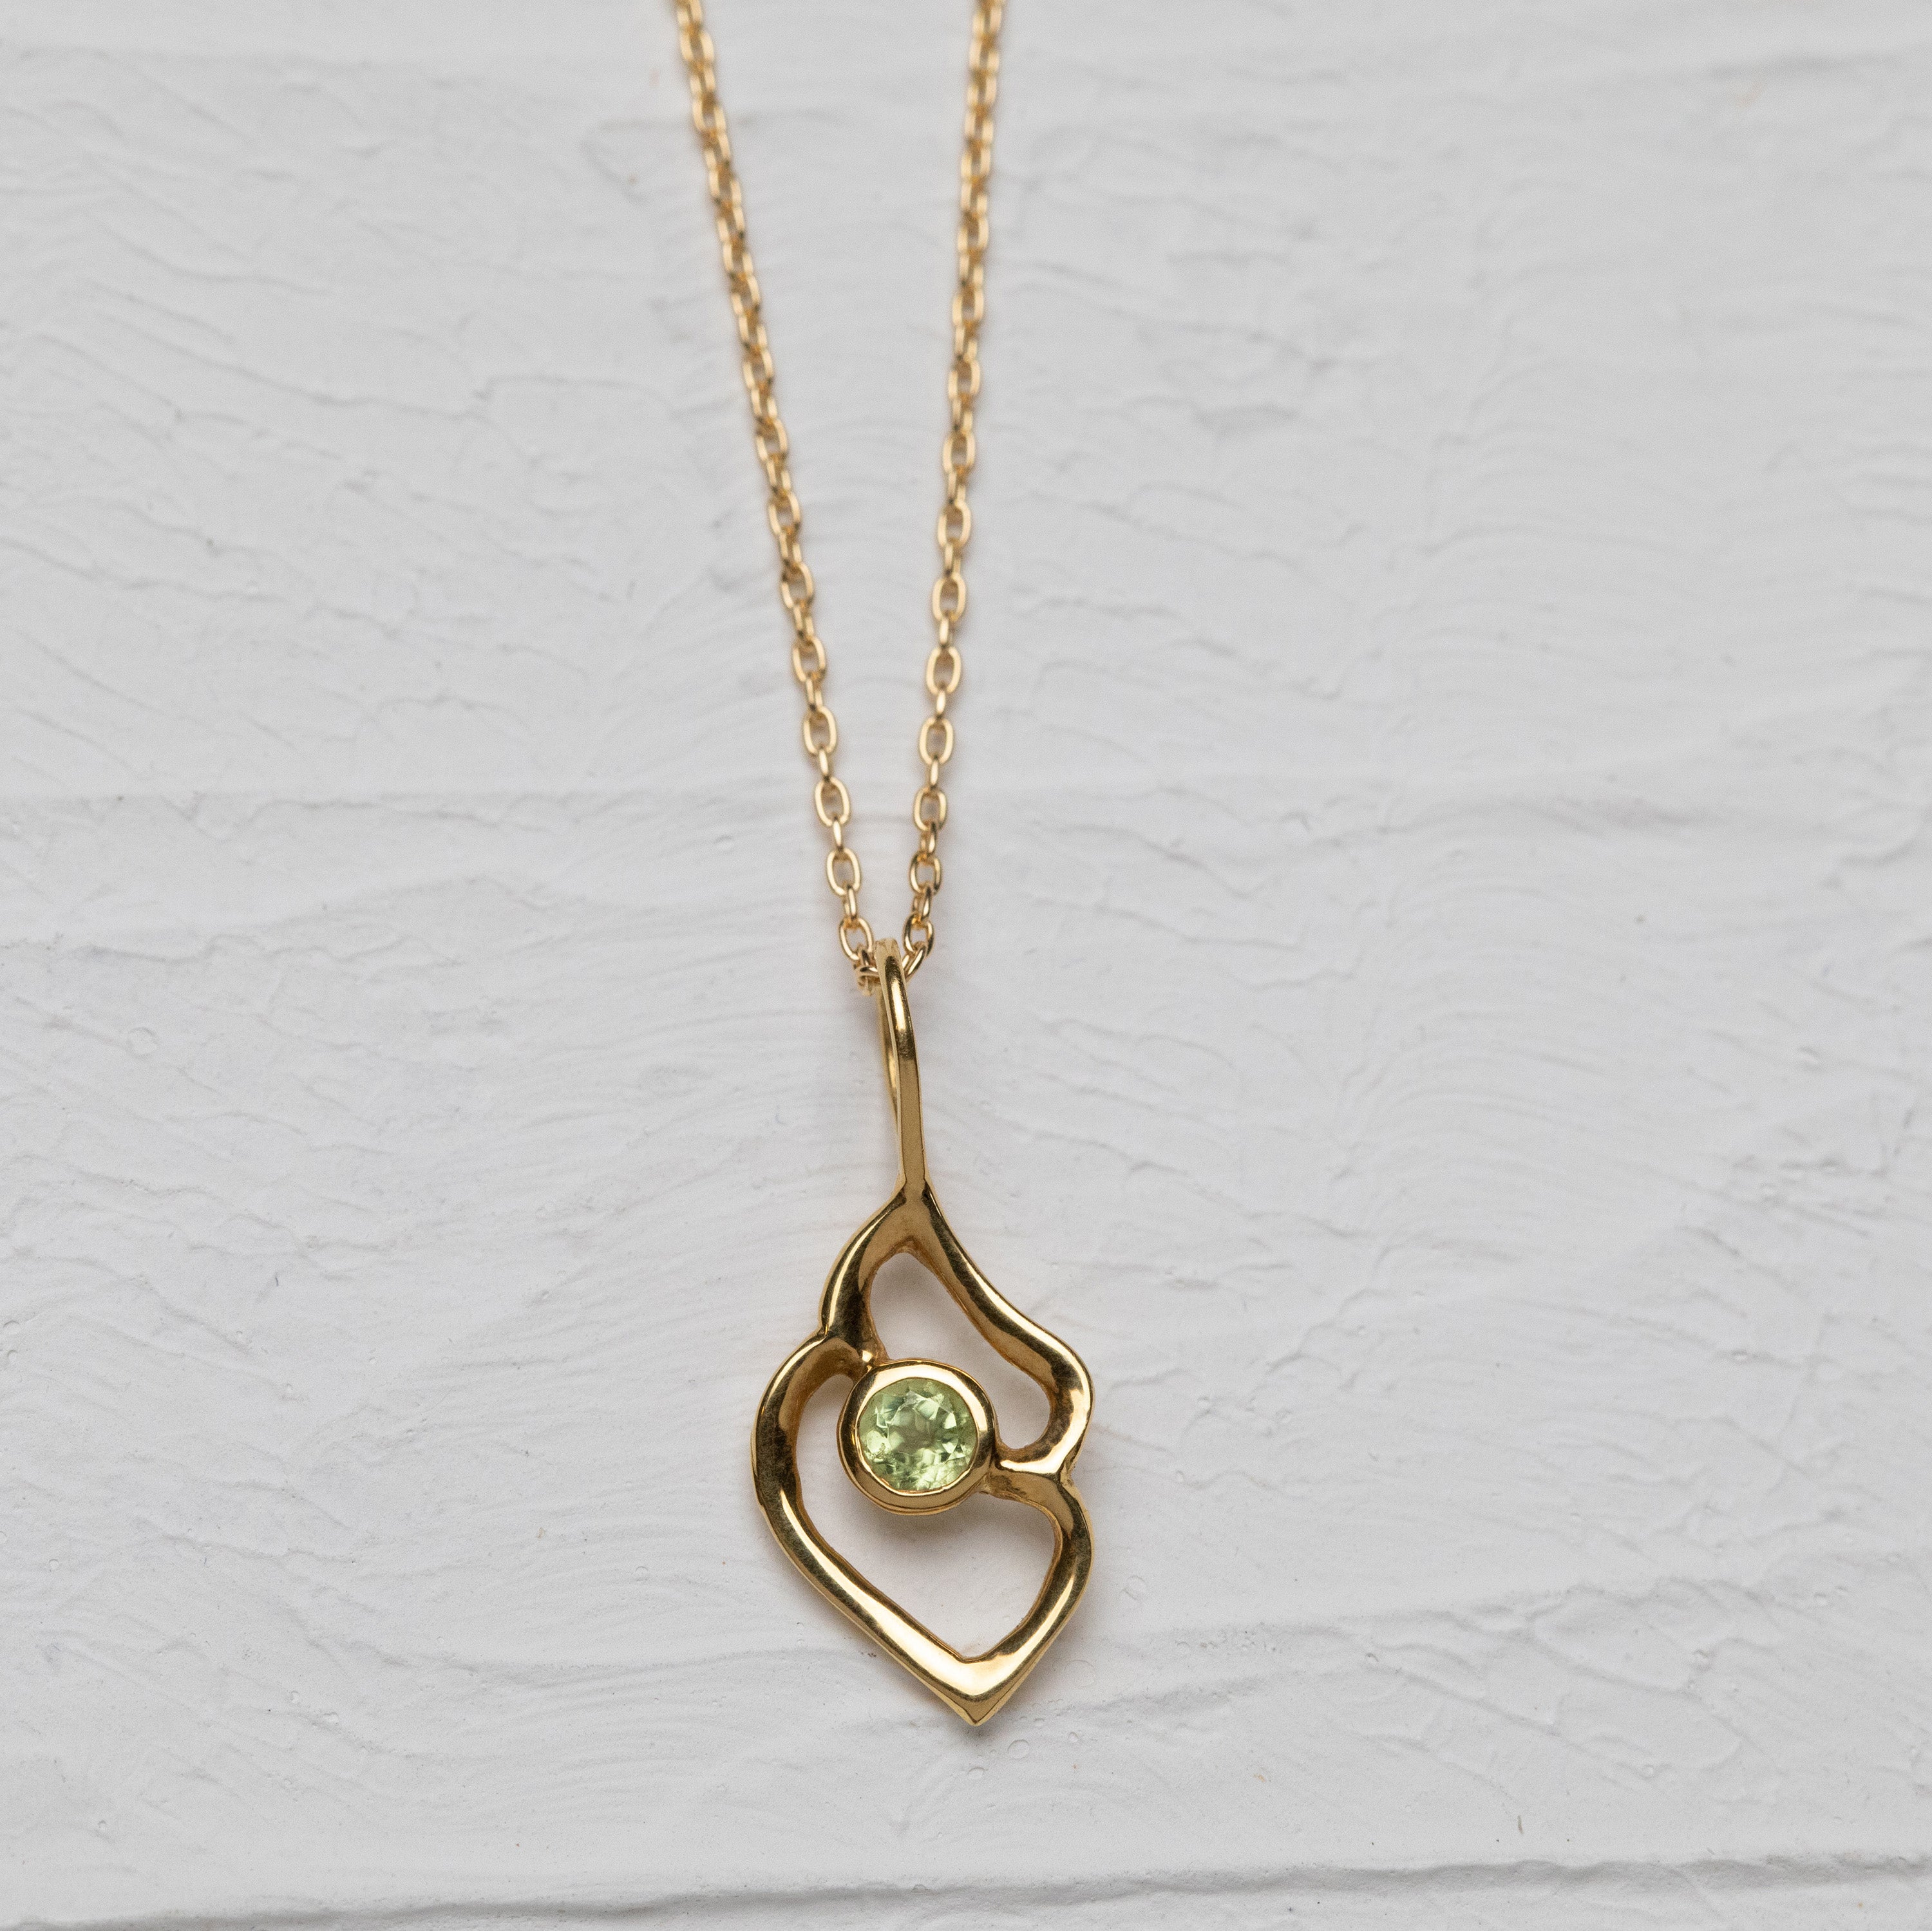 Shell Shape Necklace with Peridot (18k)